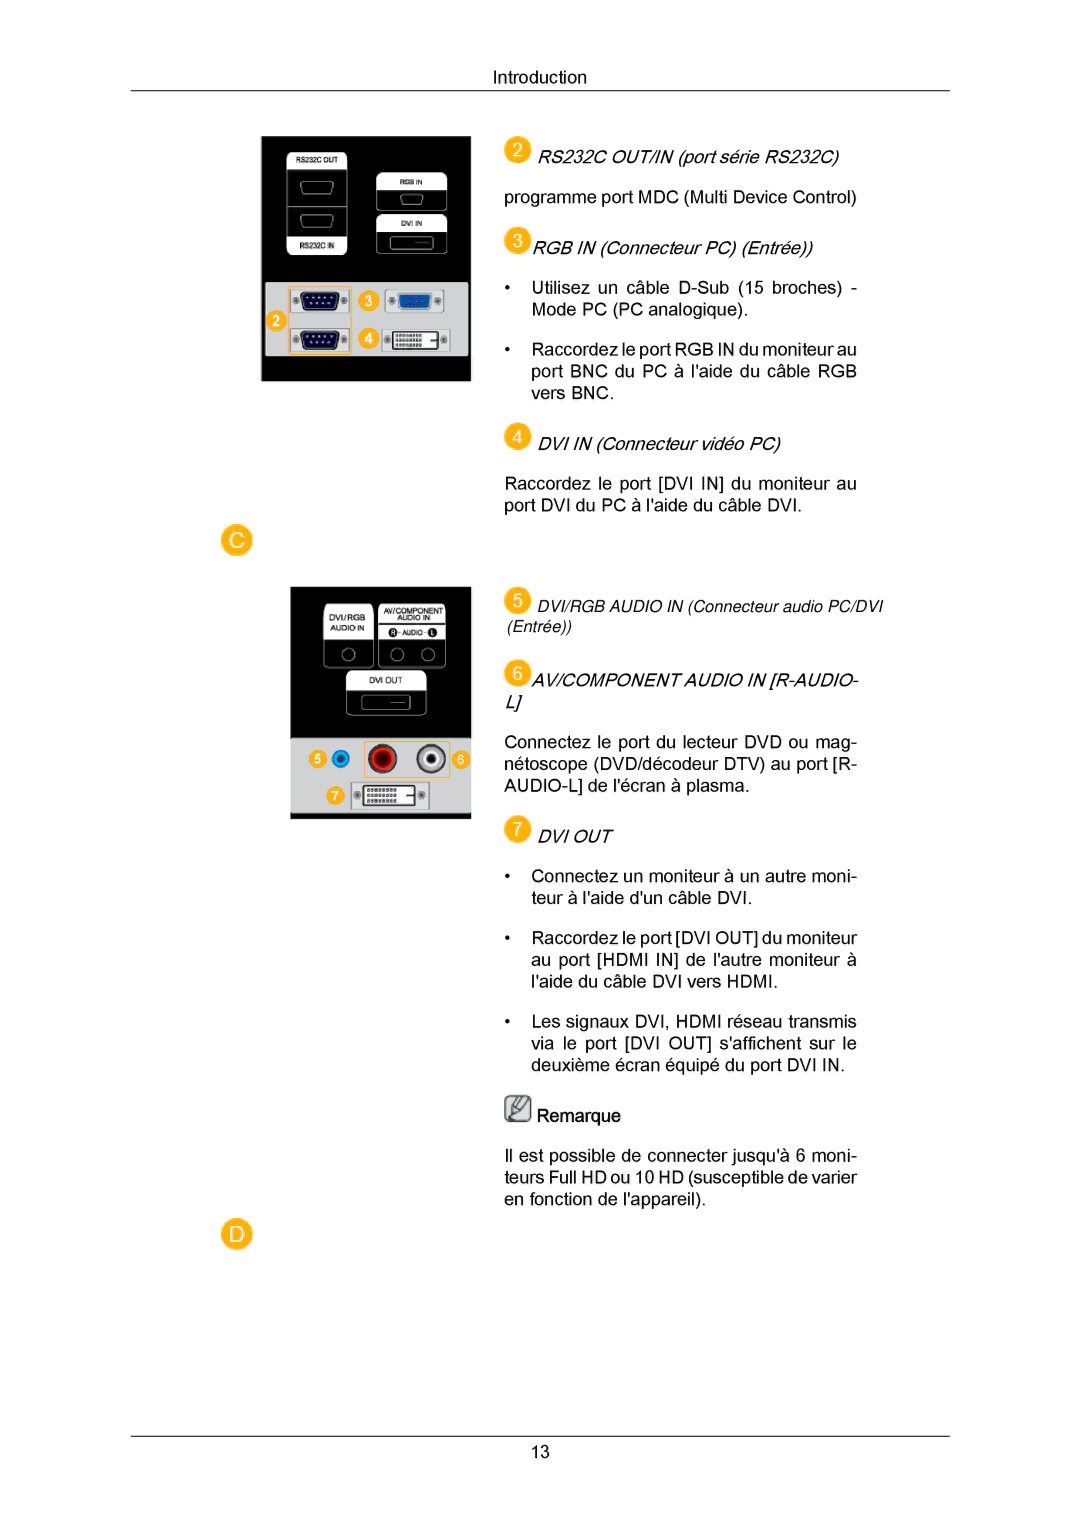 Samsung PH63KRFLBF/EN, PH63KRFLBX/EN, PH63KPFLBF/EN, PH50KRPLBF/EN, PH50KPPLBF/EN manual AV/COMPONENT Audio in R-AUDIO 